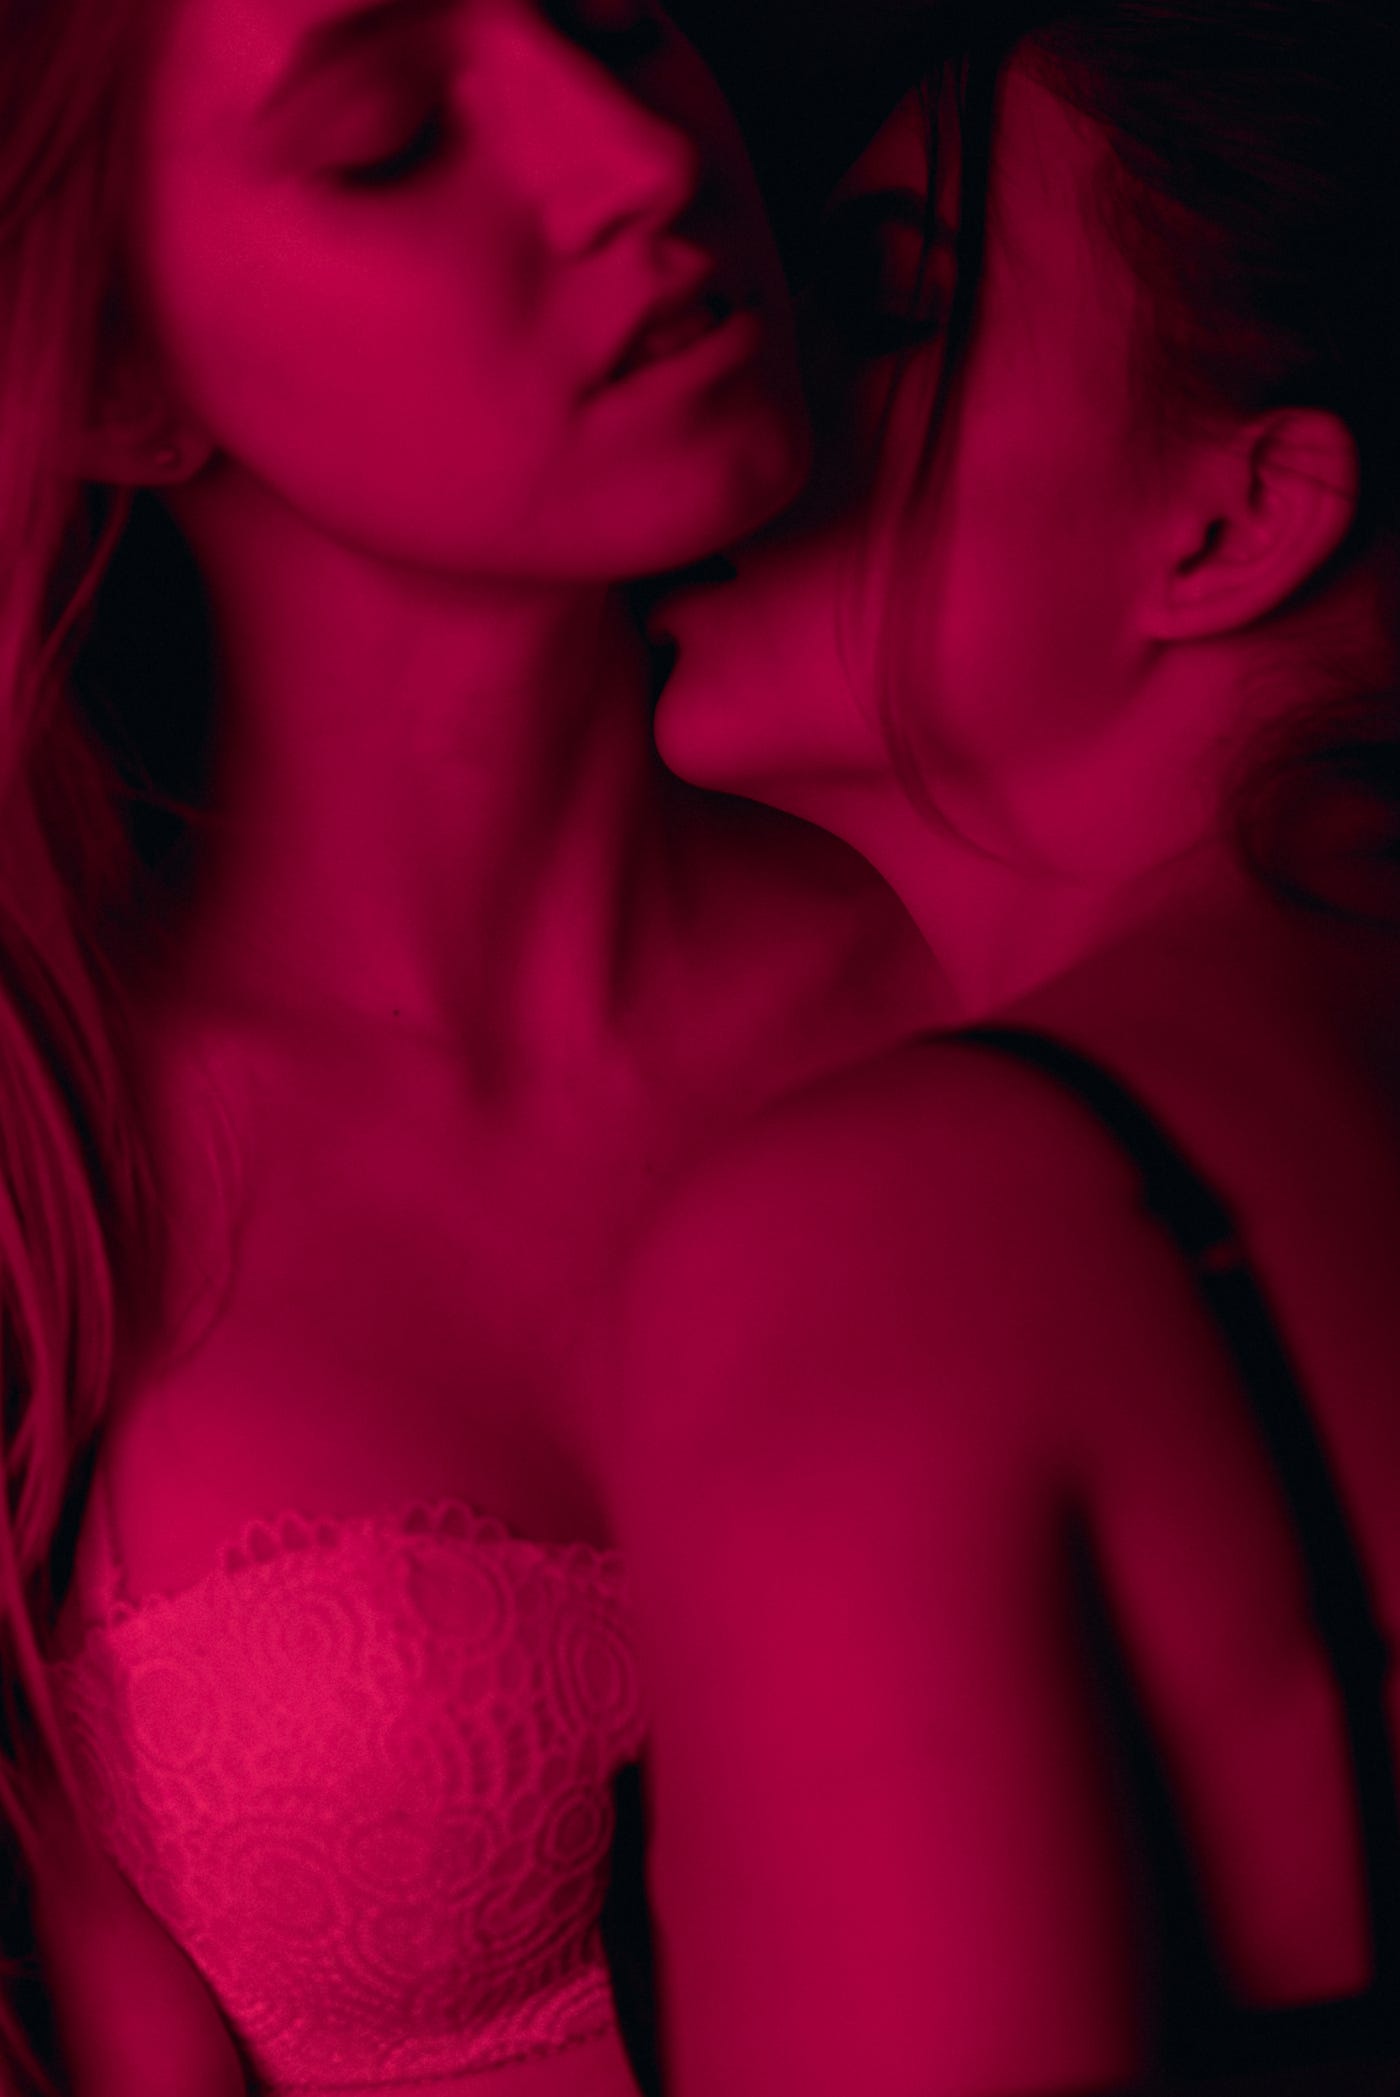 Erotic Stories — FF, MM and Beyond by Hana Lang Hana Lang Writes Medium picture